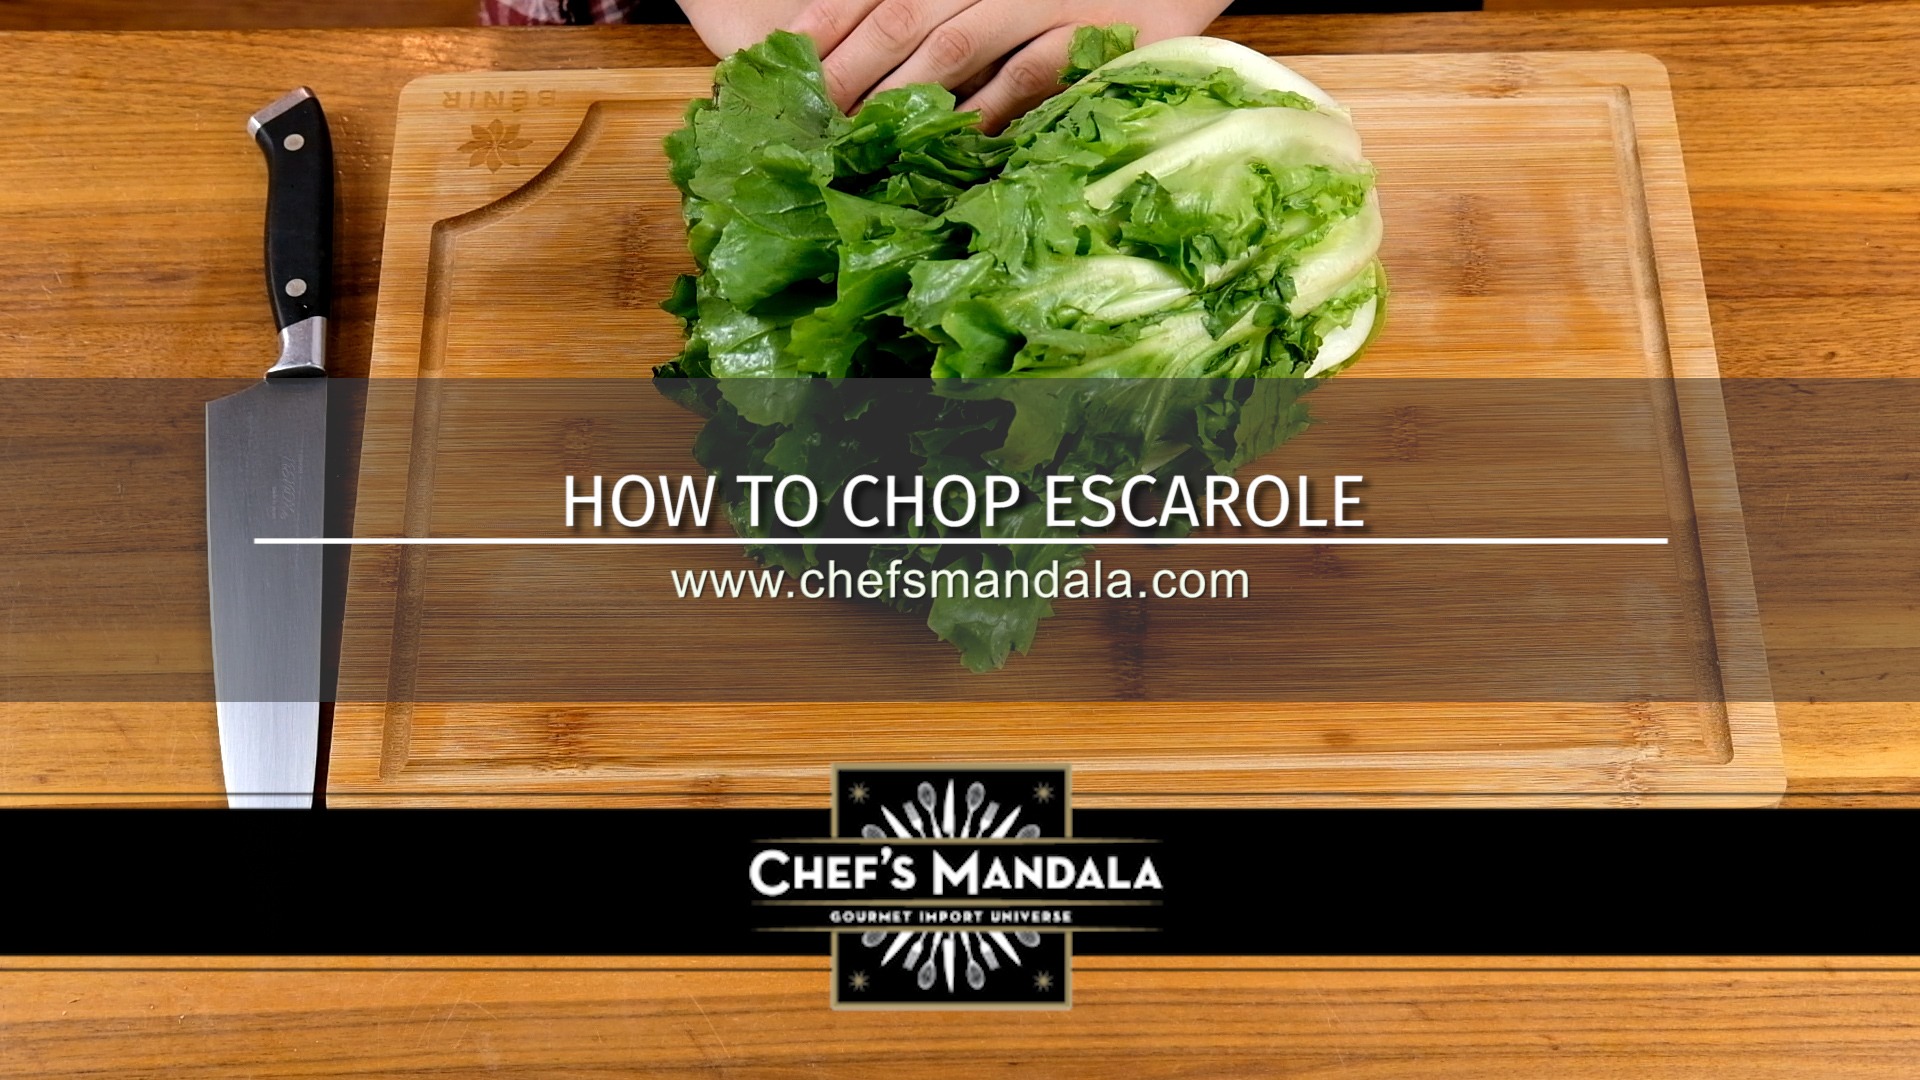 HOW TO CHOP ESCAROLE